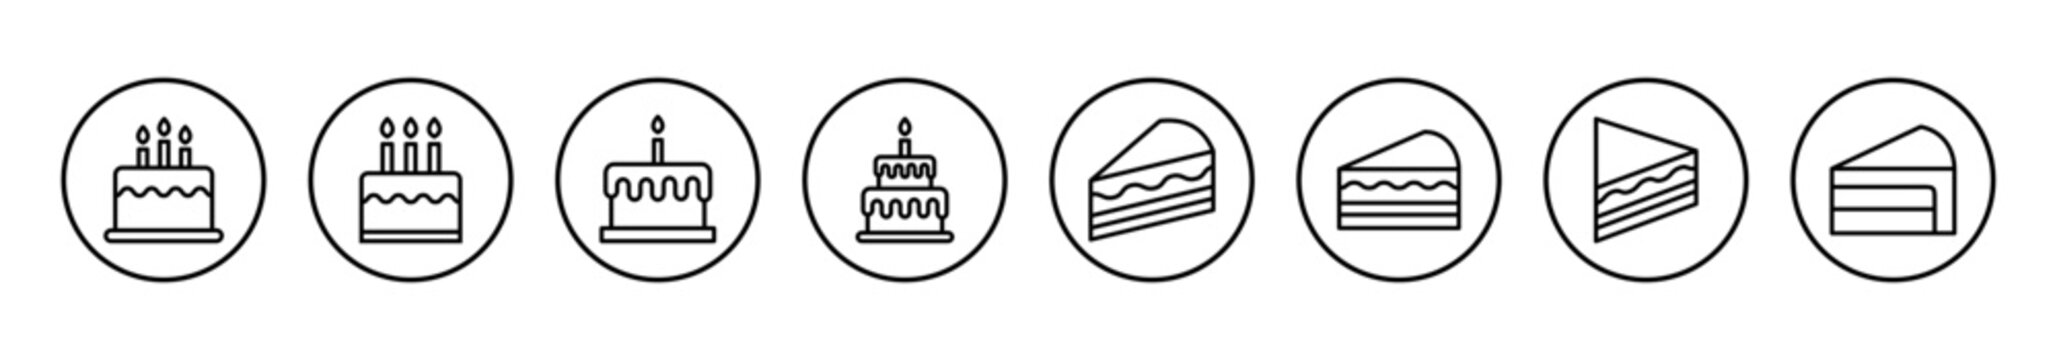 Cake icon vector illustration. Cake sign and symbol. Birthday cake icon